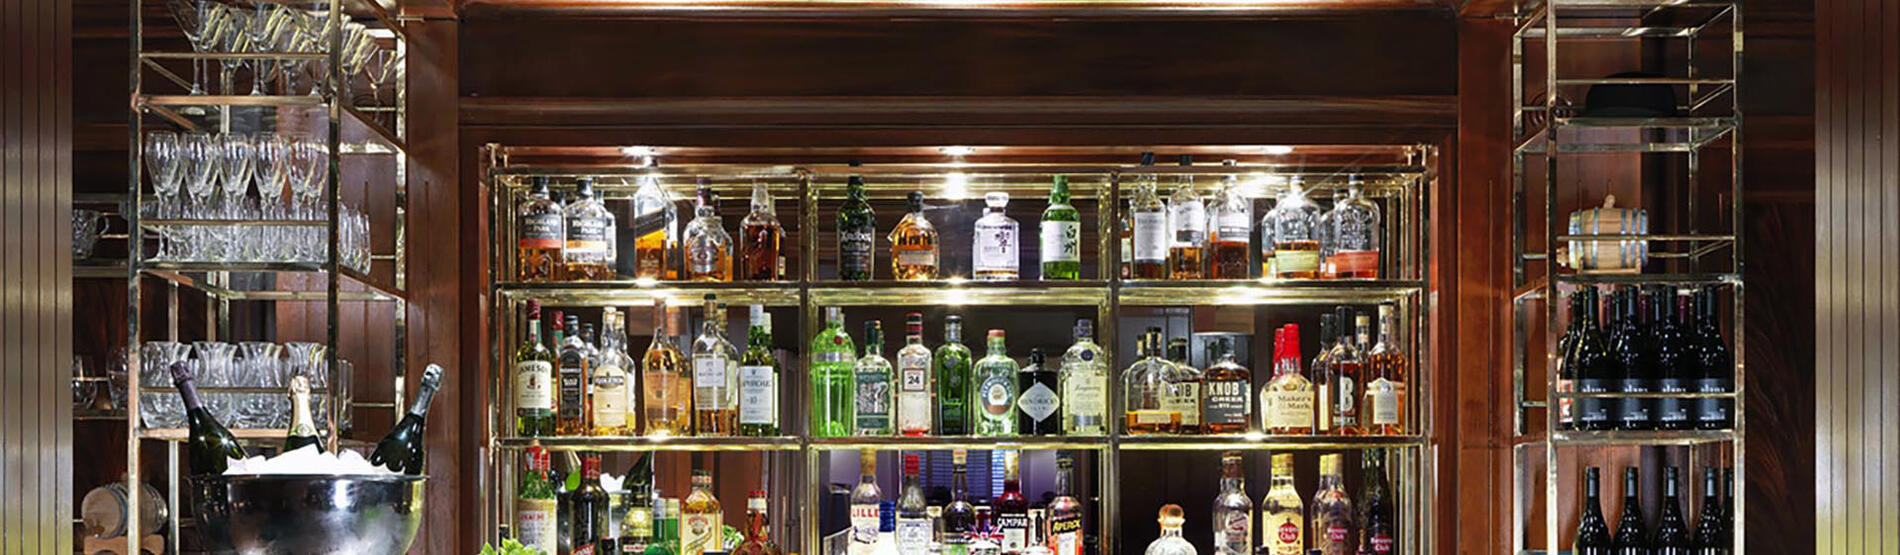 The Bloomsbury Club Bar Interior